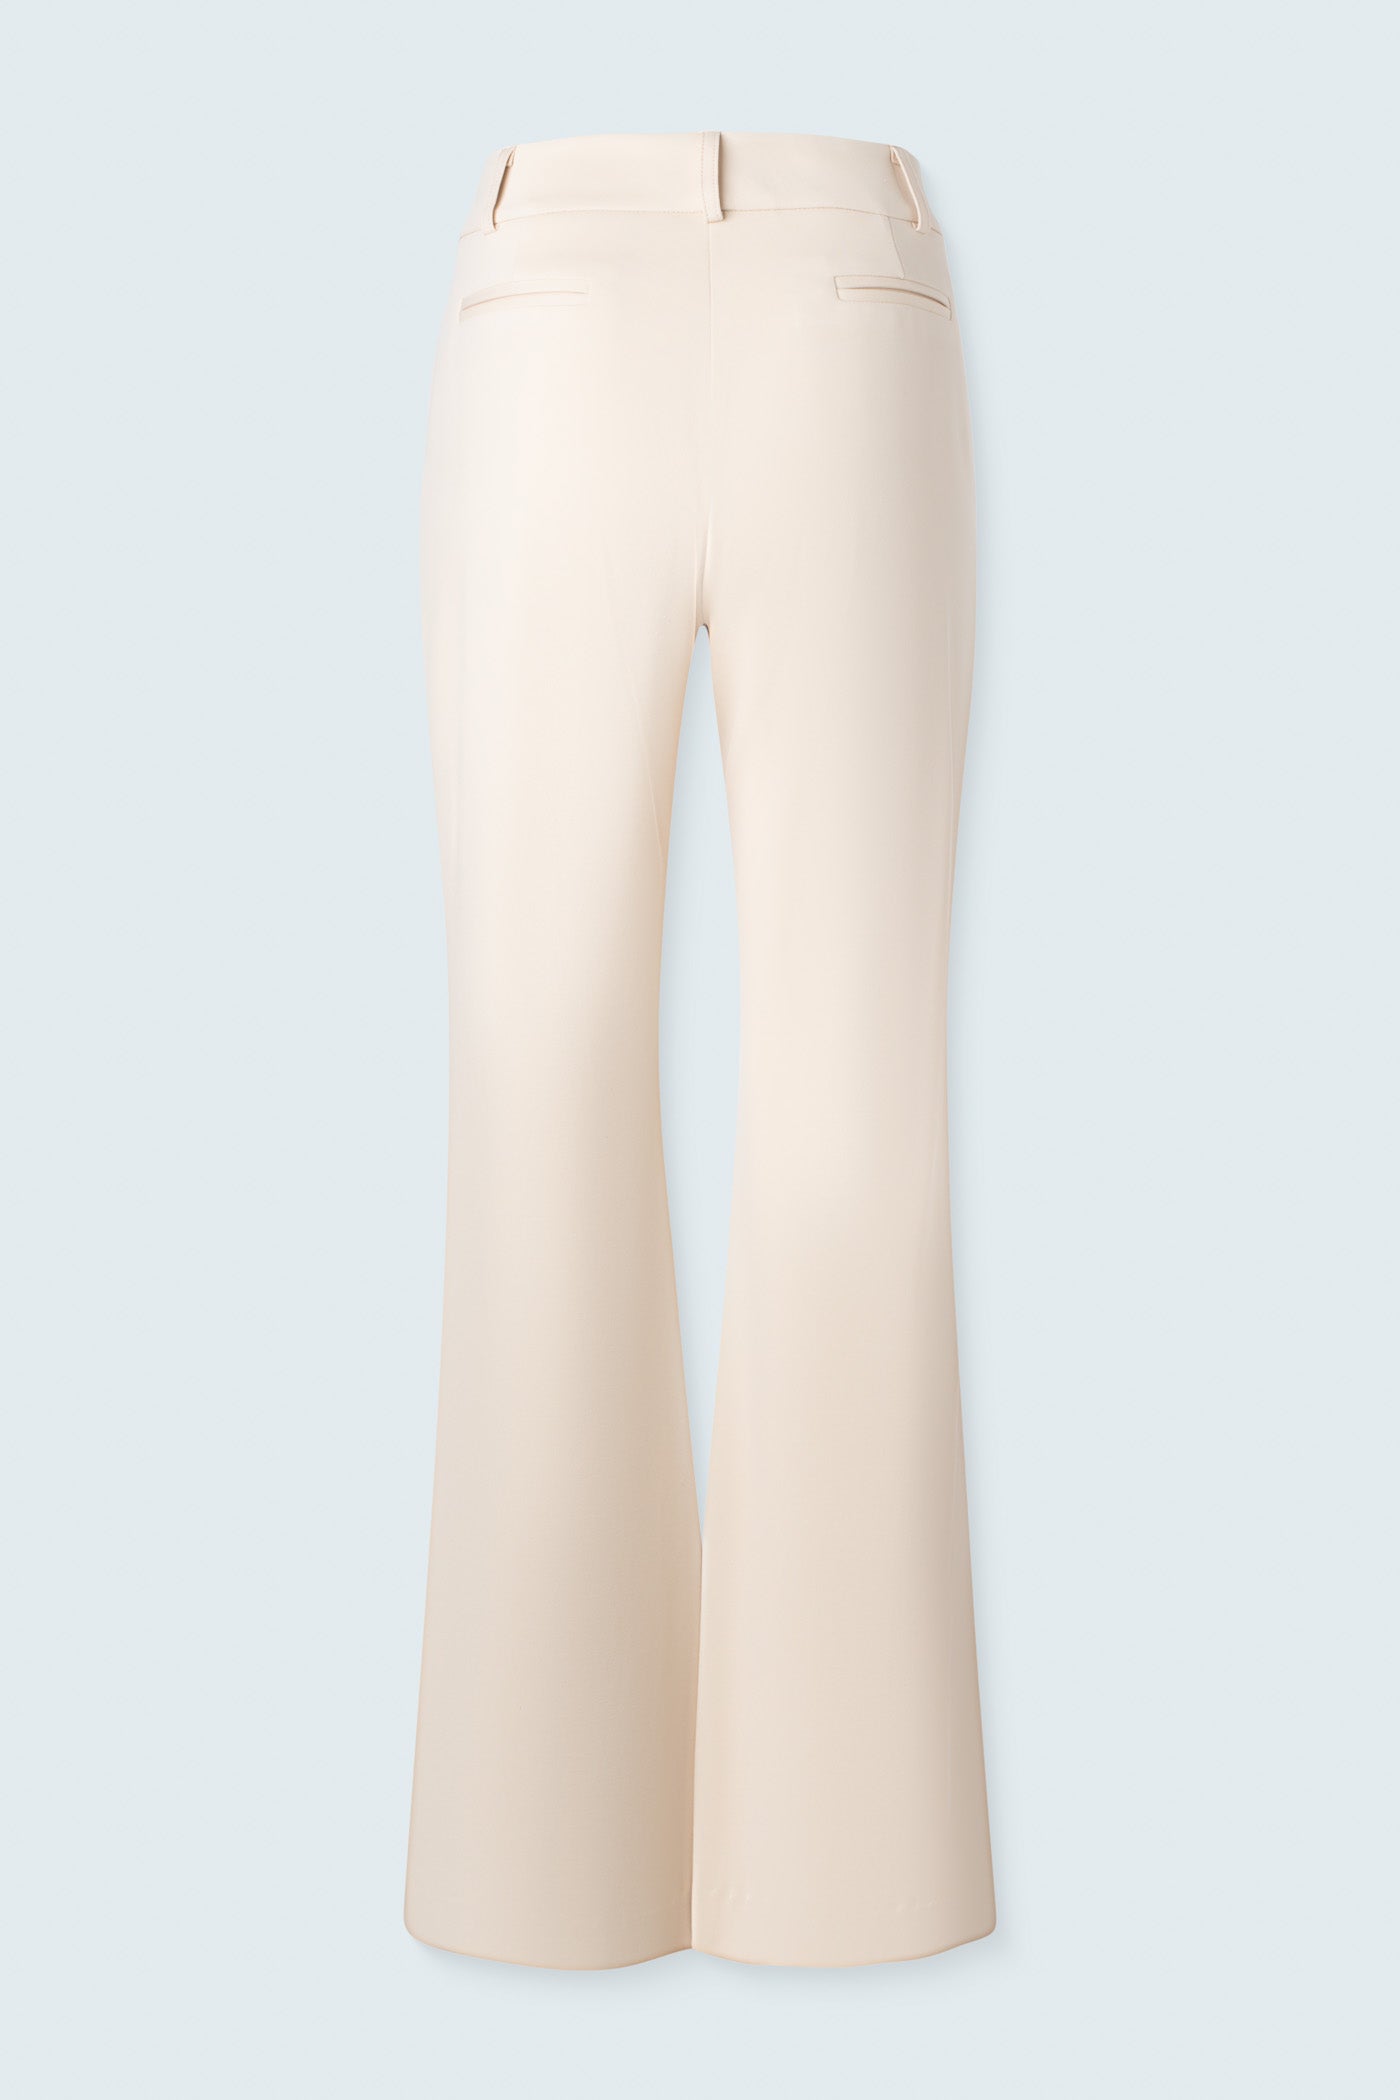 Women High Waist Stretch Slim Fit Fashion Split Flare Pants Casual Long  Trousers | eBay